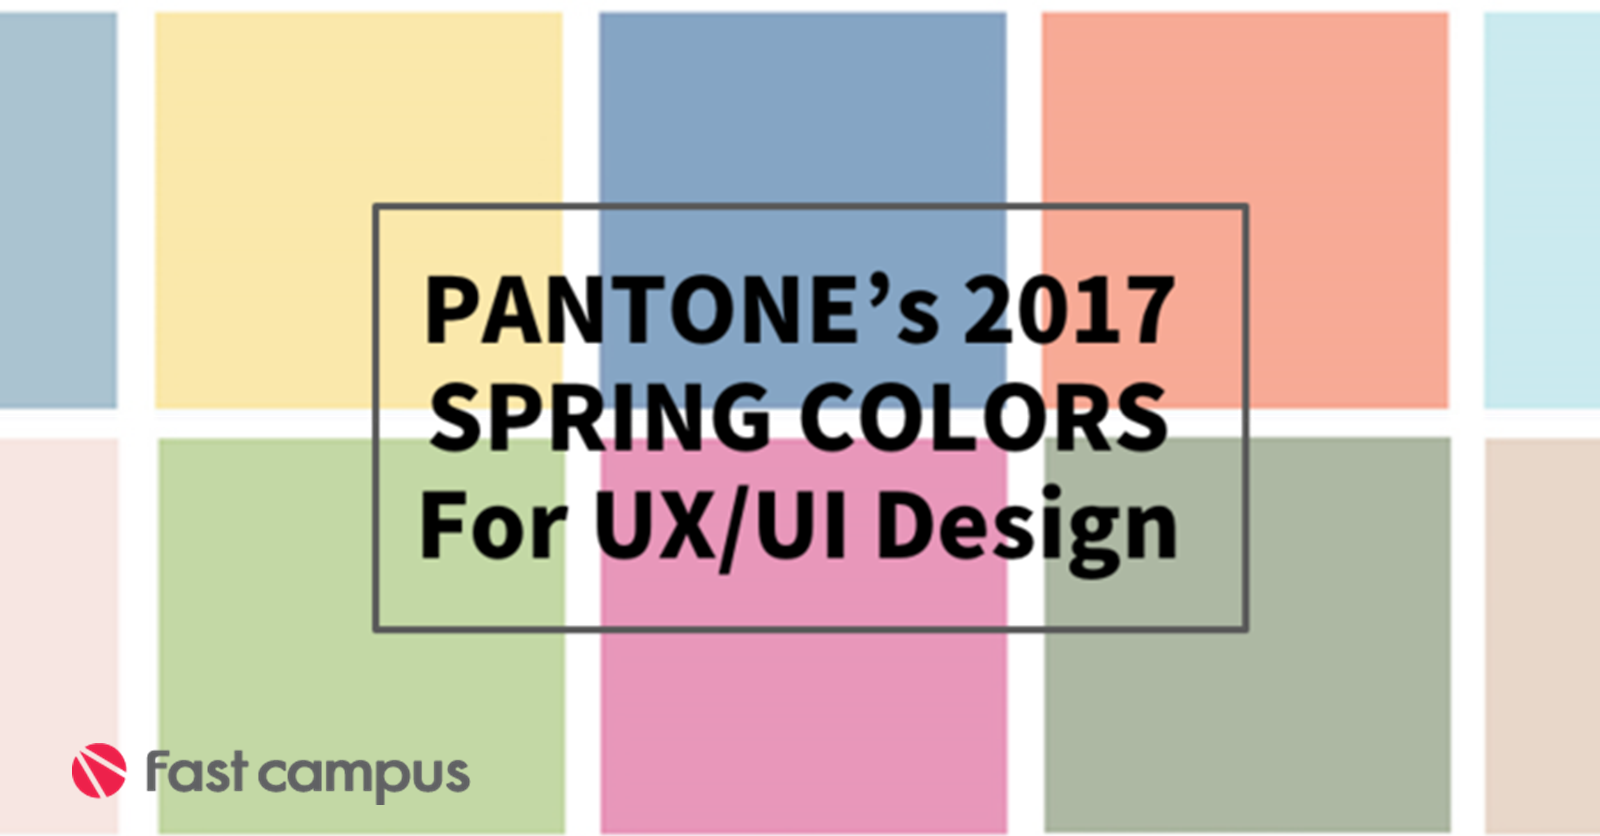 PANTONE'S 2017 SPRING COLORS FOR UX/UI Design